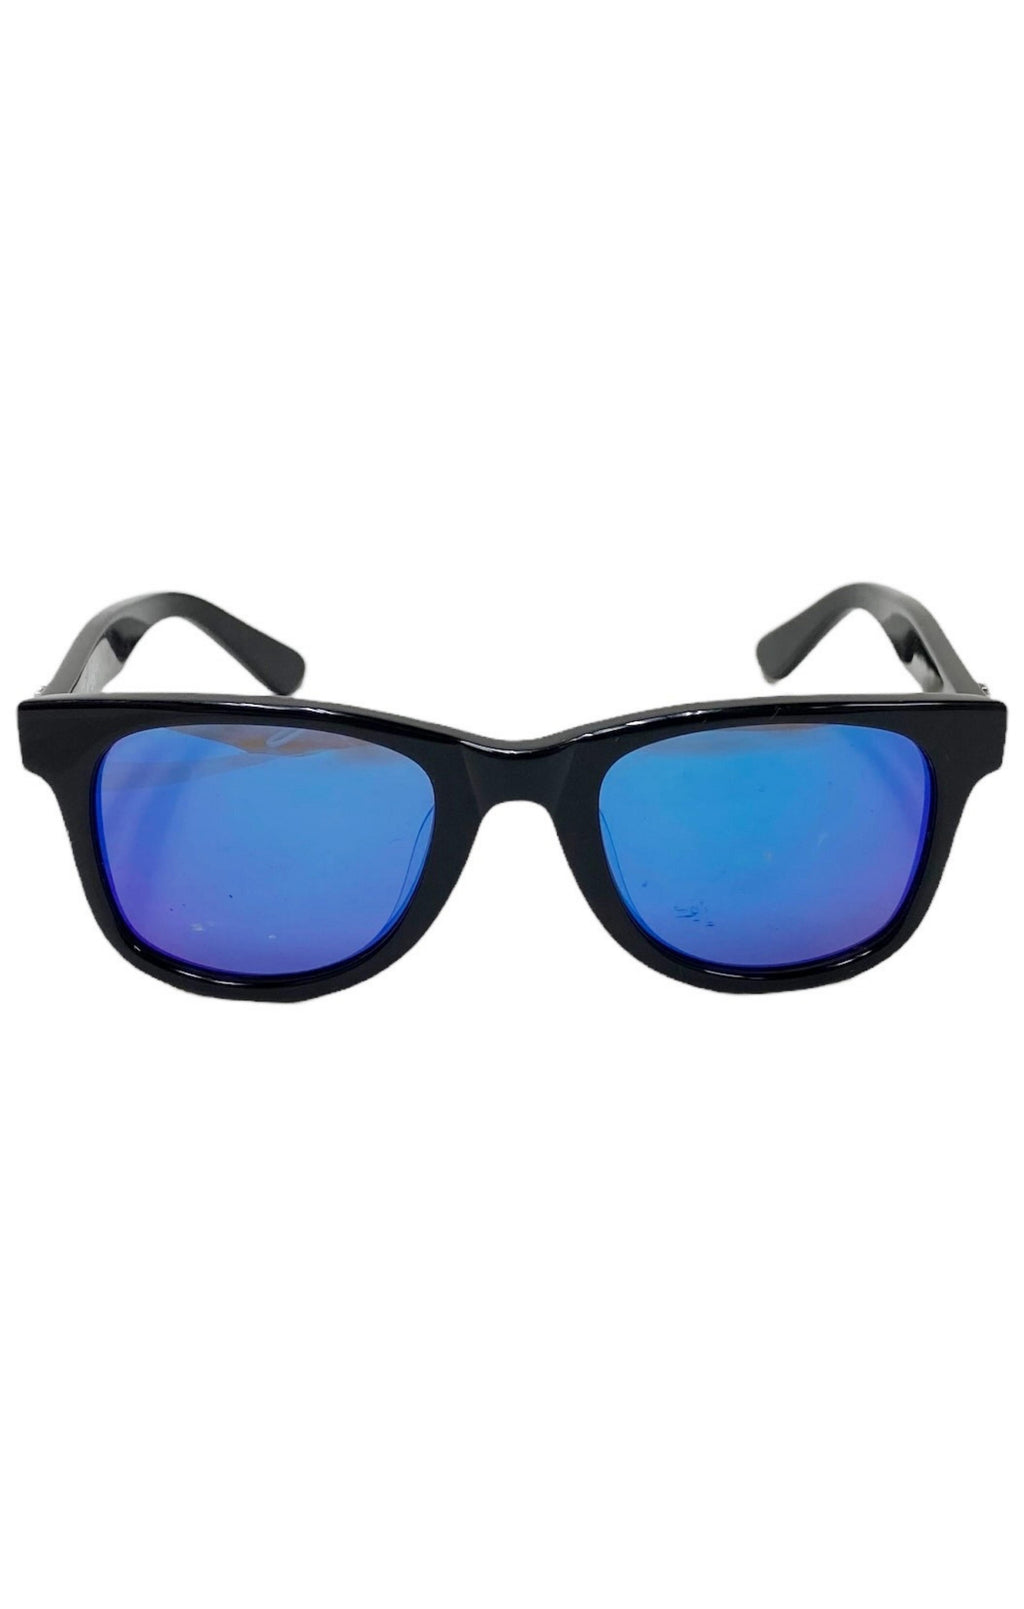 GOOSE & DUST (RARE) Sunglasses Size: 4.825" x 1.625" (Kids)